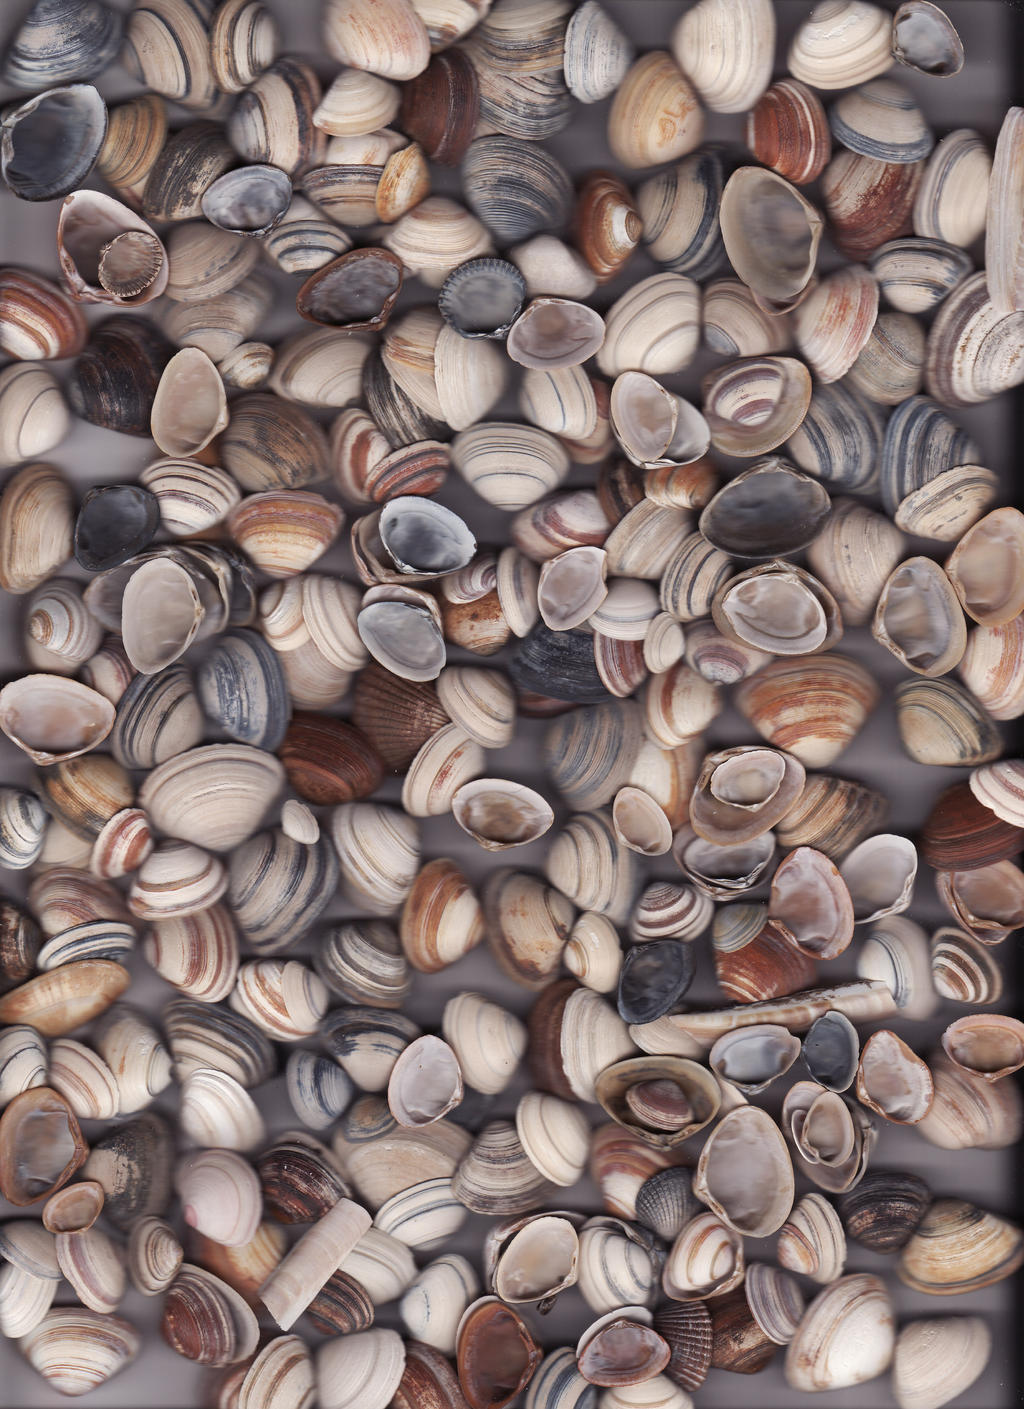 Sea shells I